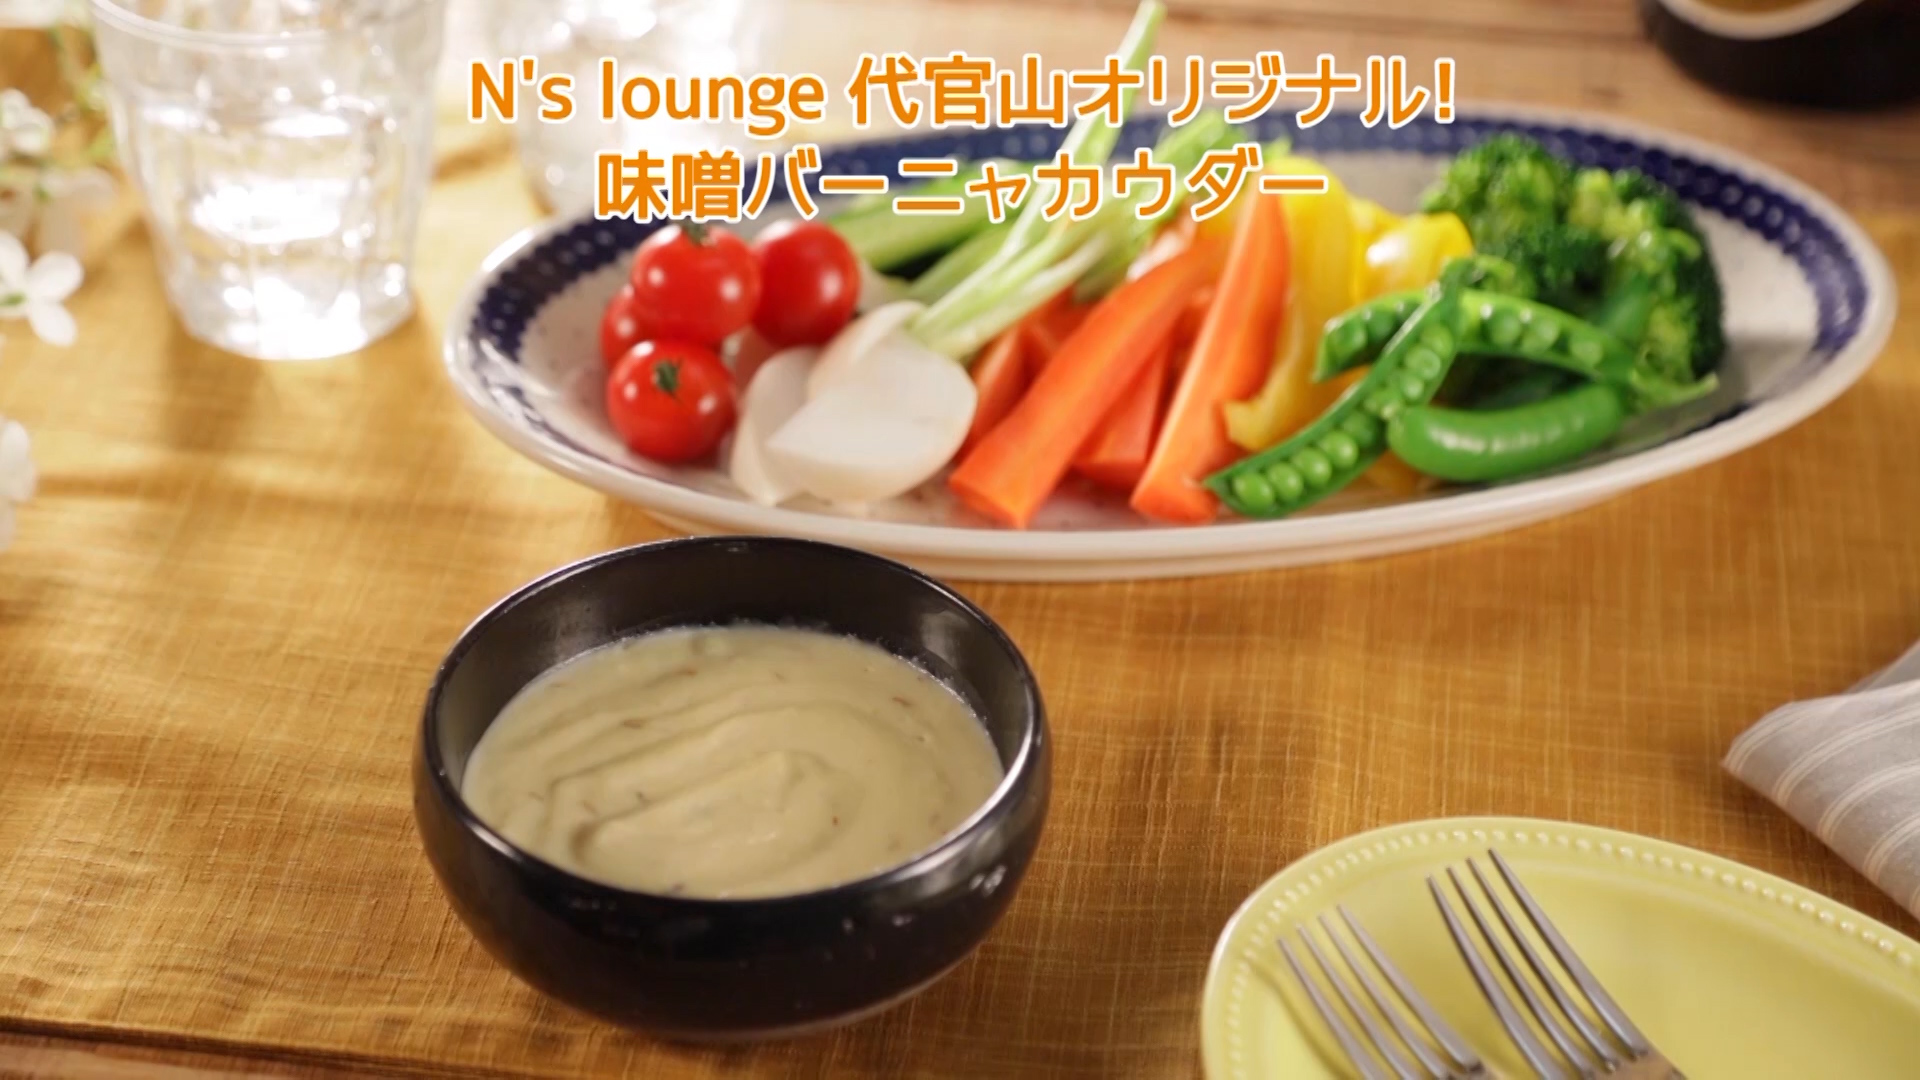 "N’s lounge代官山オリジナル！味噌バーニャカウダー"